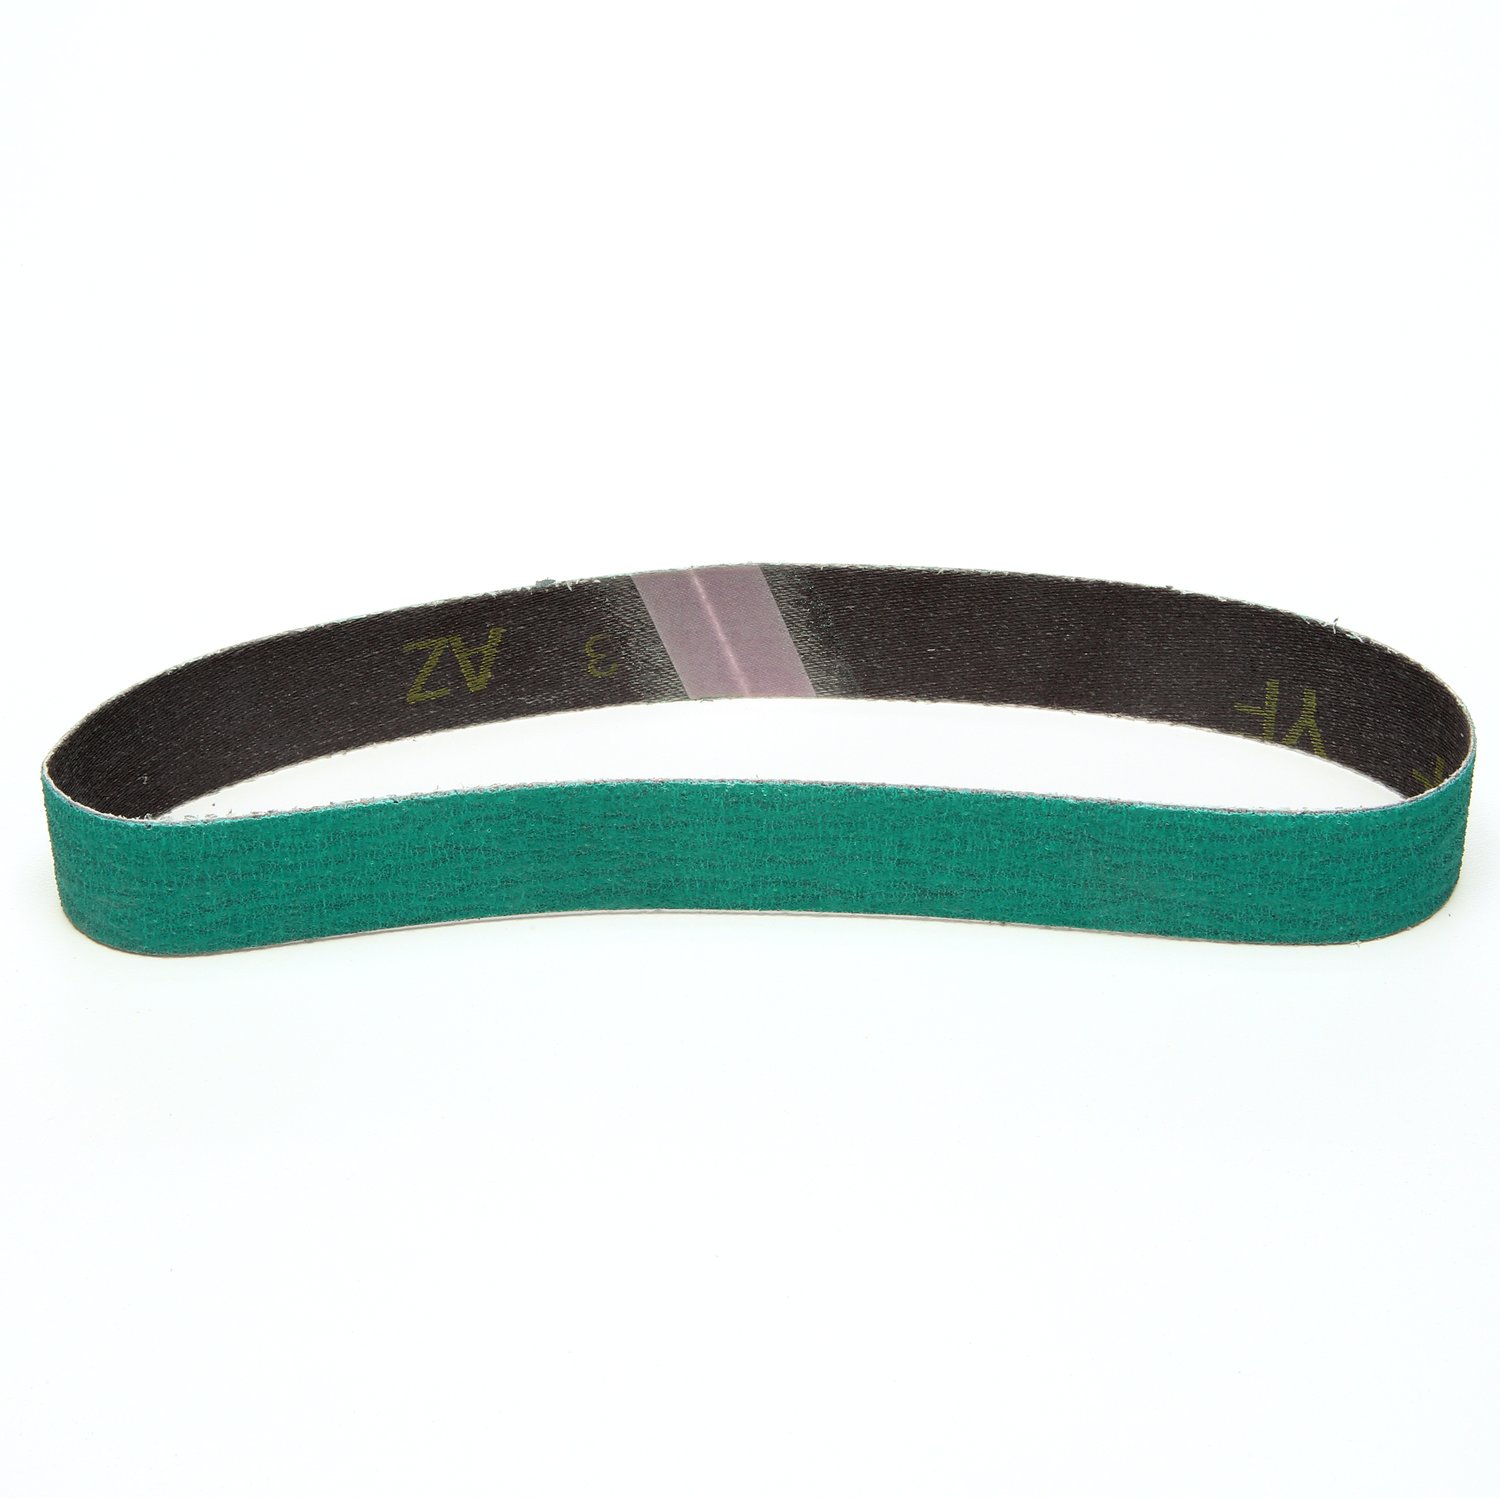 7010514109 - 3M Cloth Belt 577F, 60 YF-weight, 1-1/2 in x 60 in, Film-lok,
Single-flex